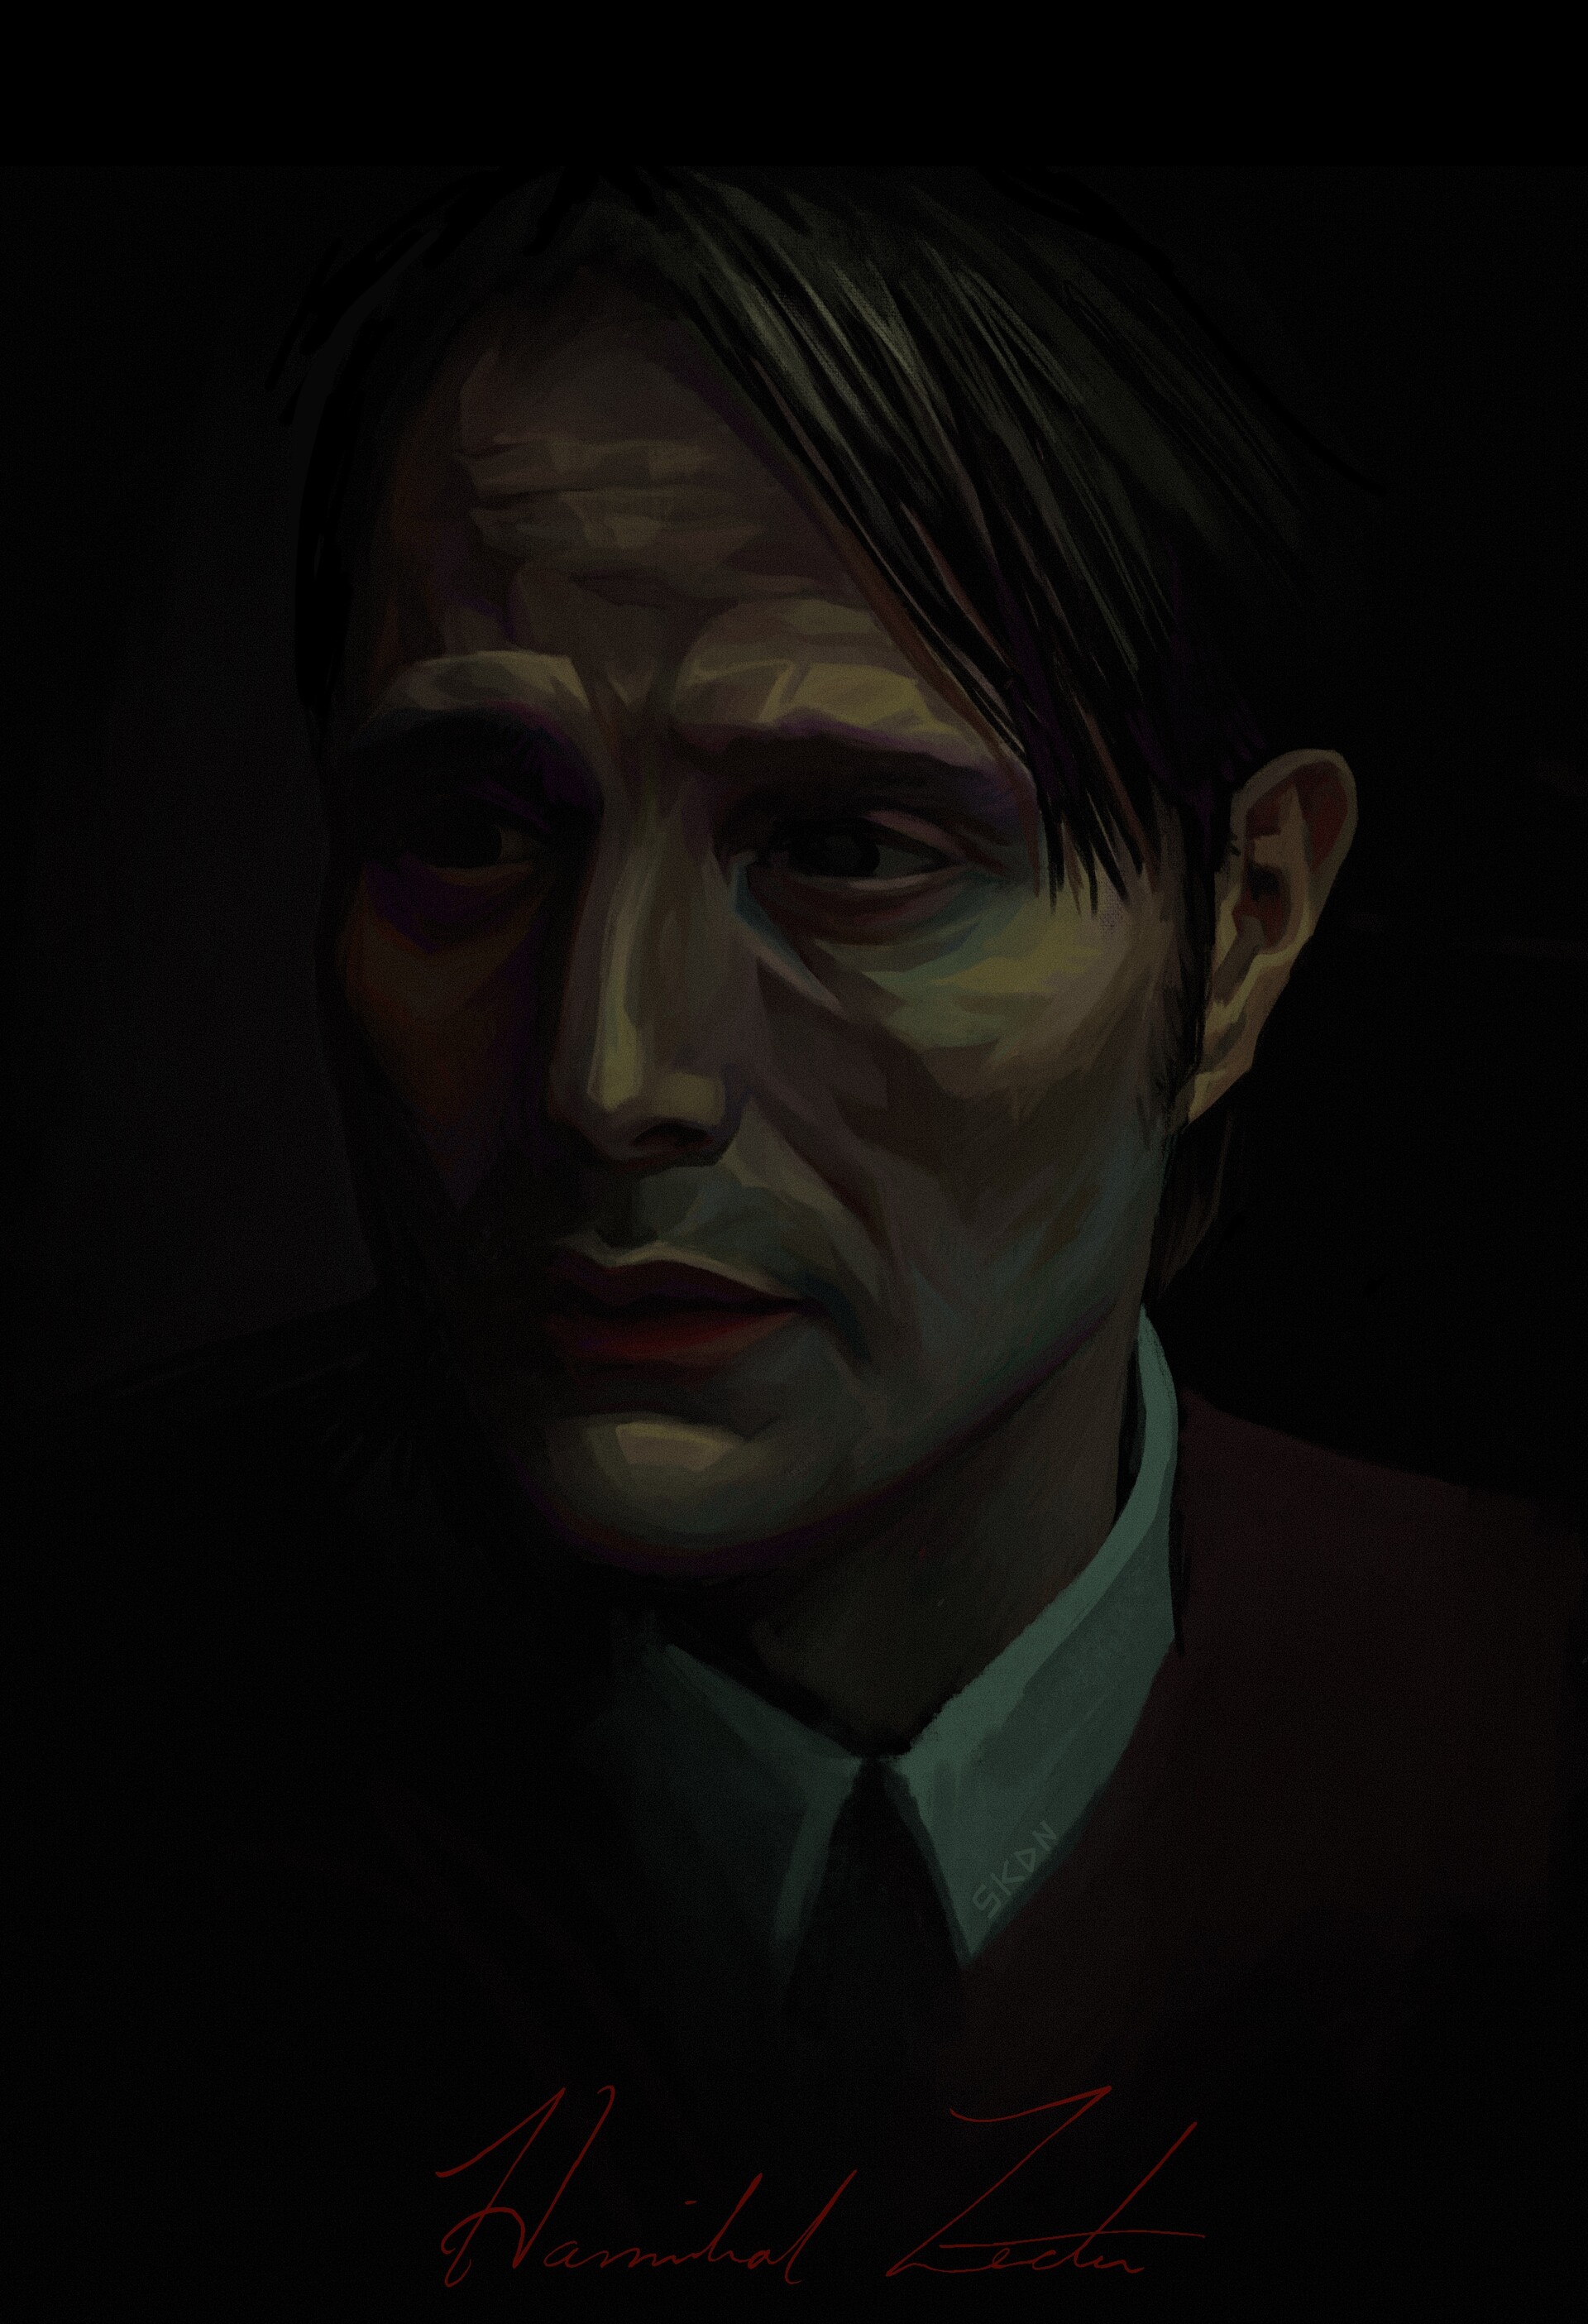 ArtStation - Hannibal Lecter